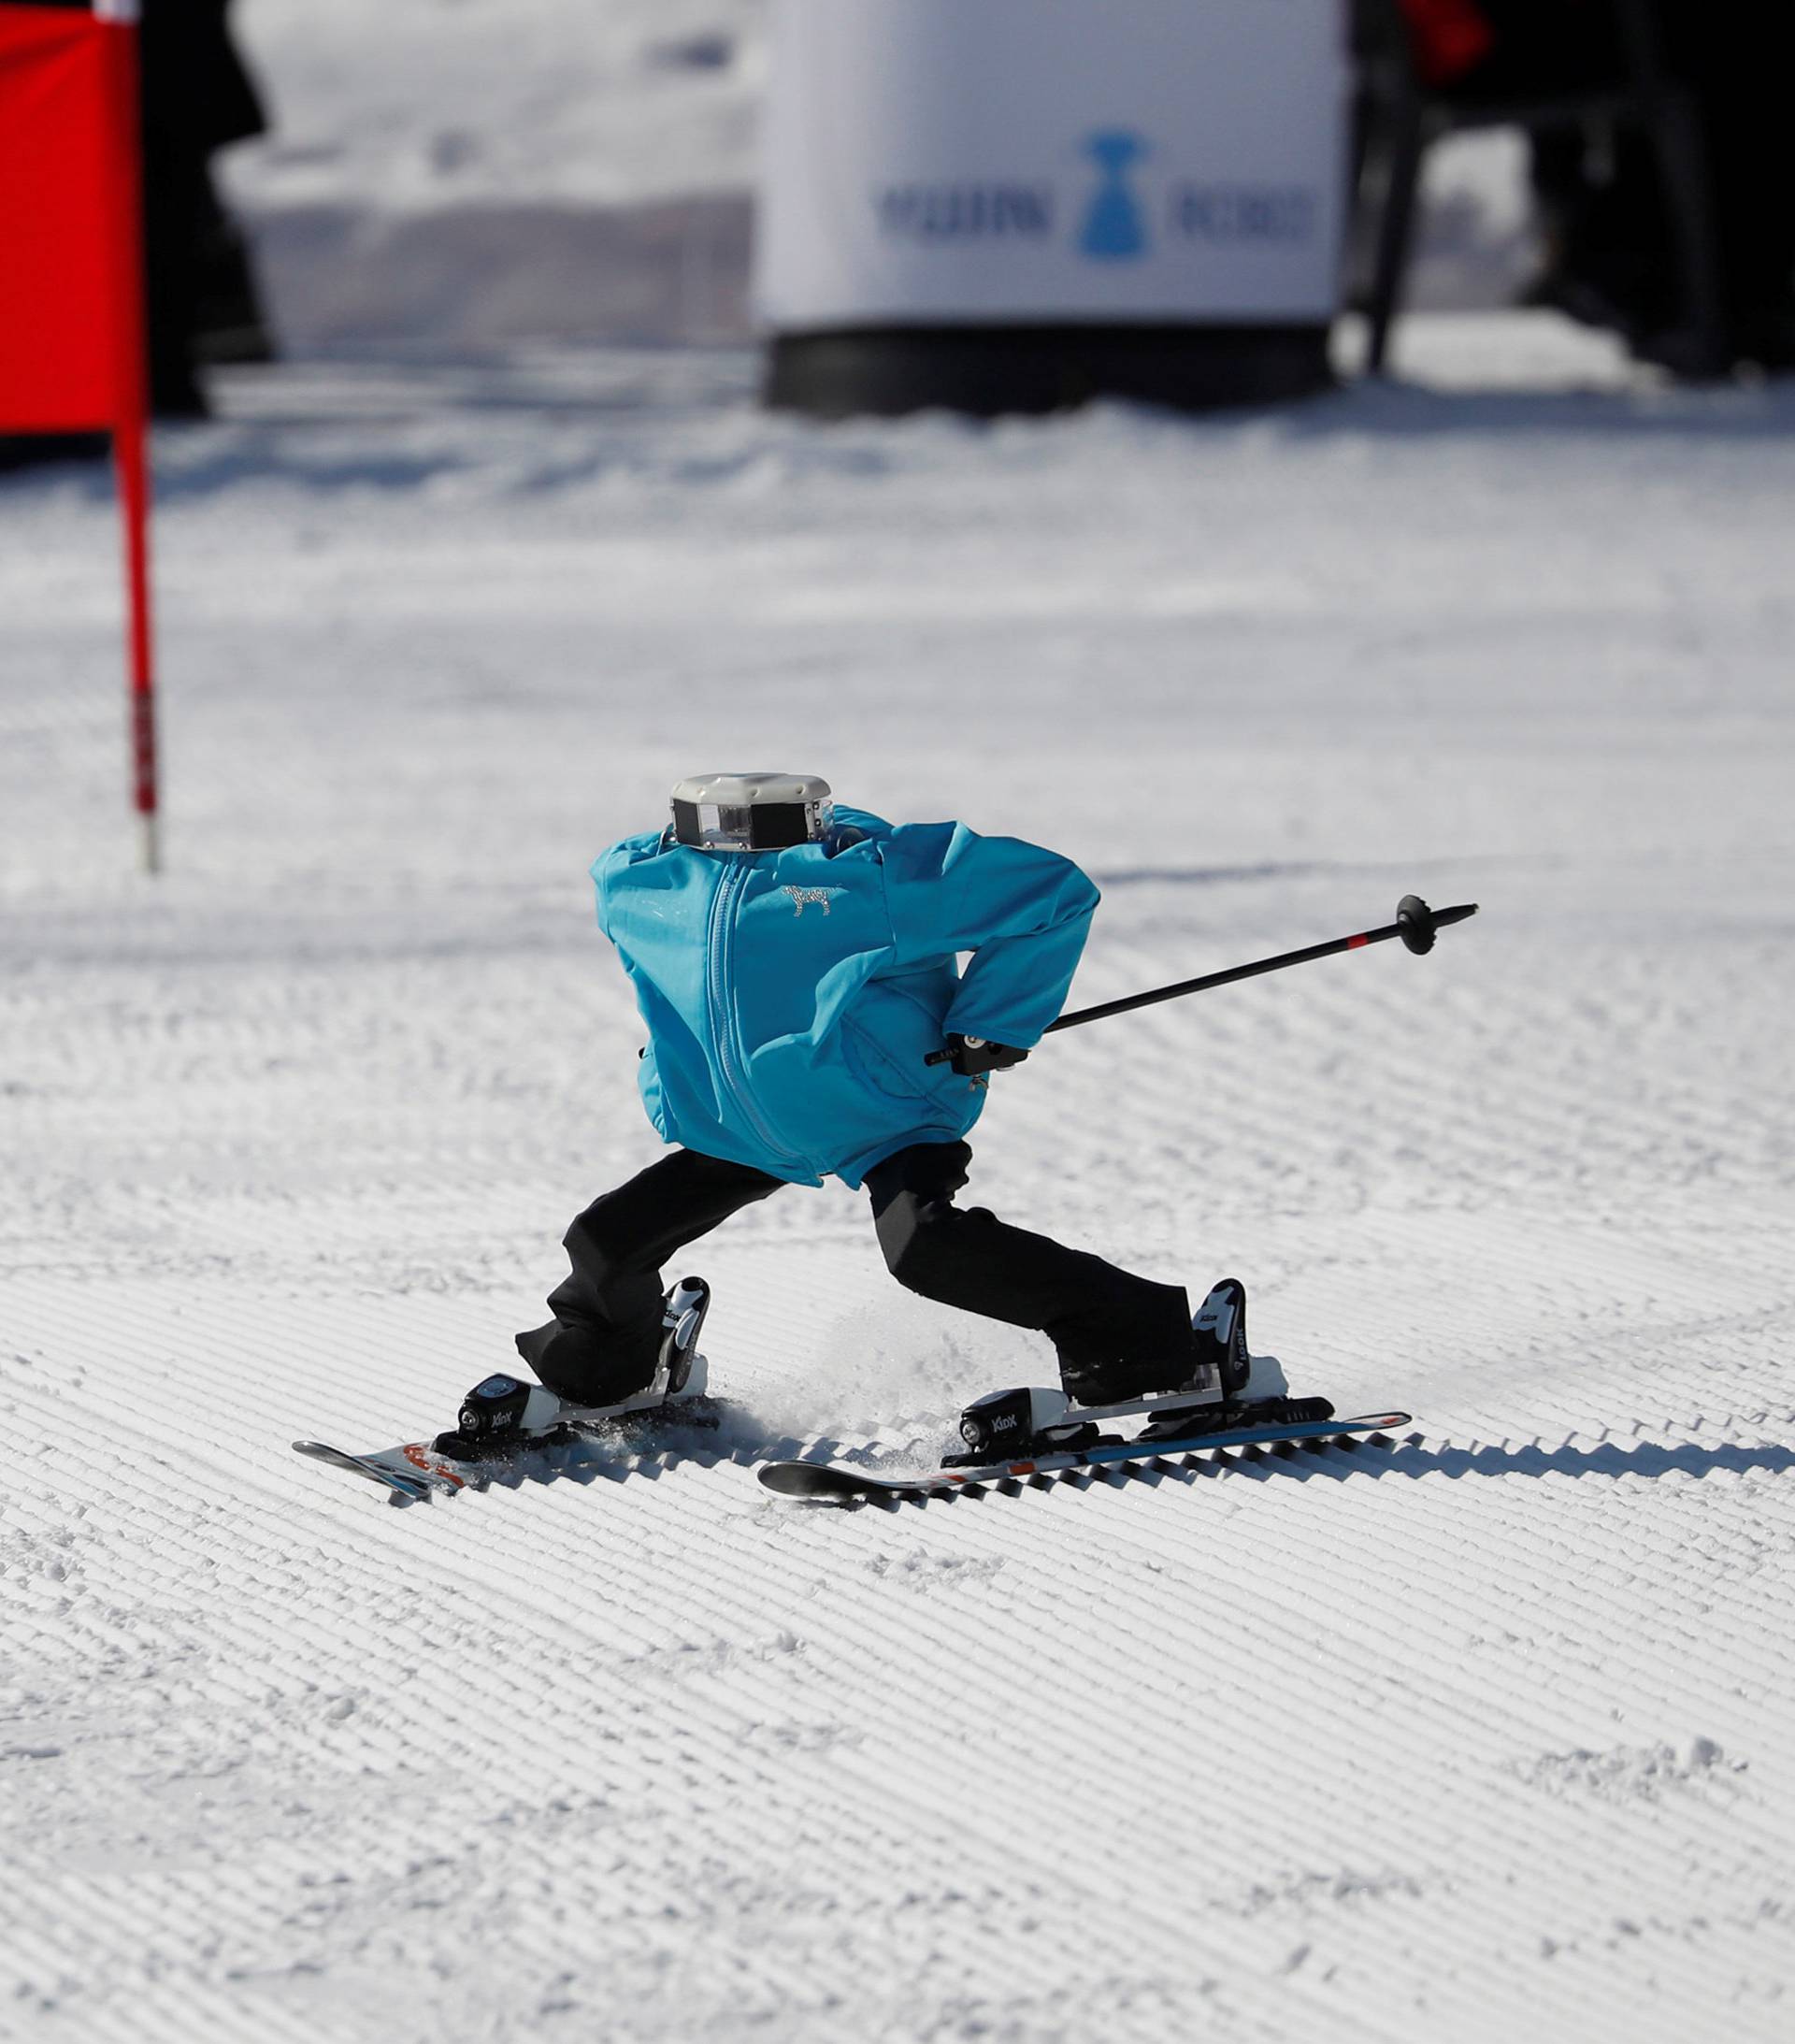 Robot Tae Kwon V skies during the Ski Robot Challenge at a ski resort in Hoenseong